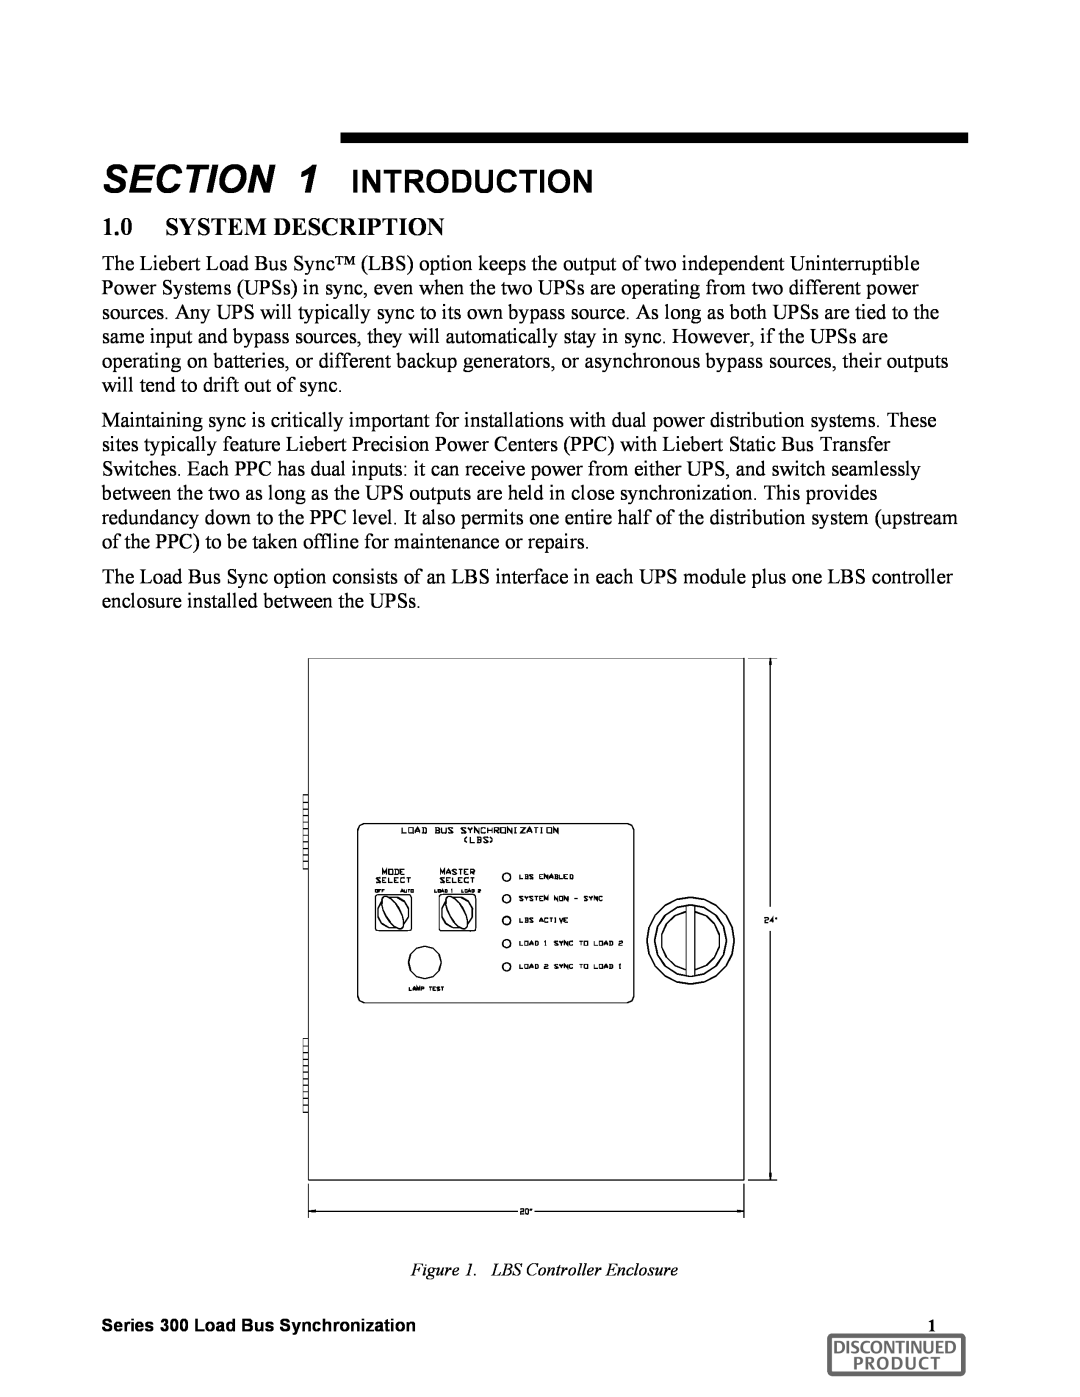 Liebert 300 manual Introduction, 1.0SYSTEM DESCRIPTION 